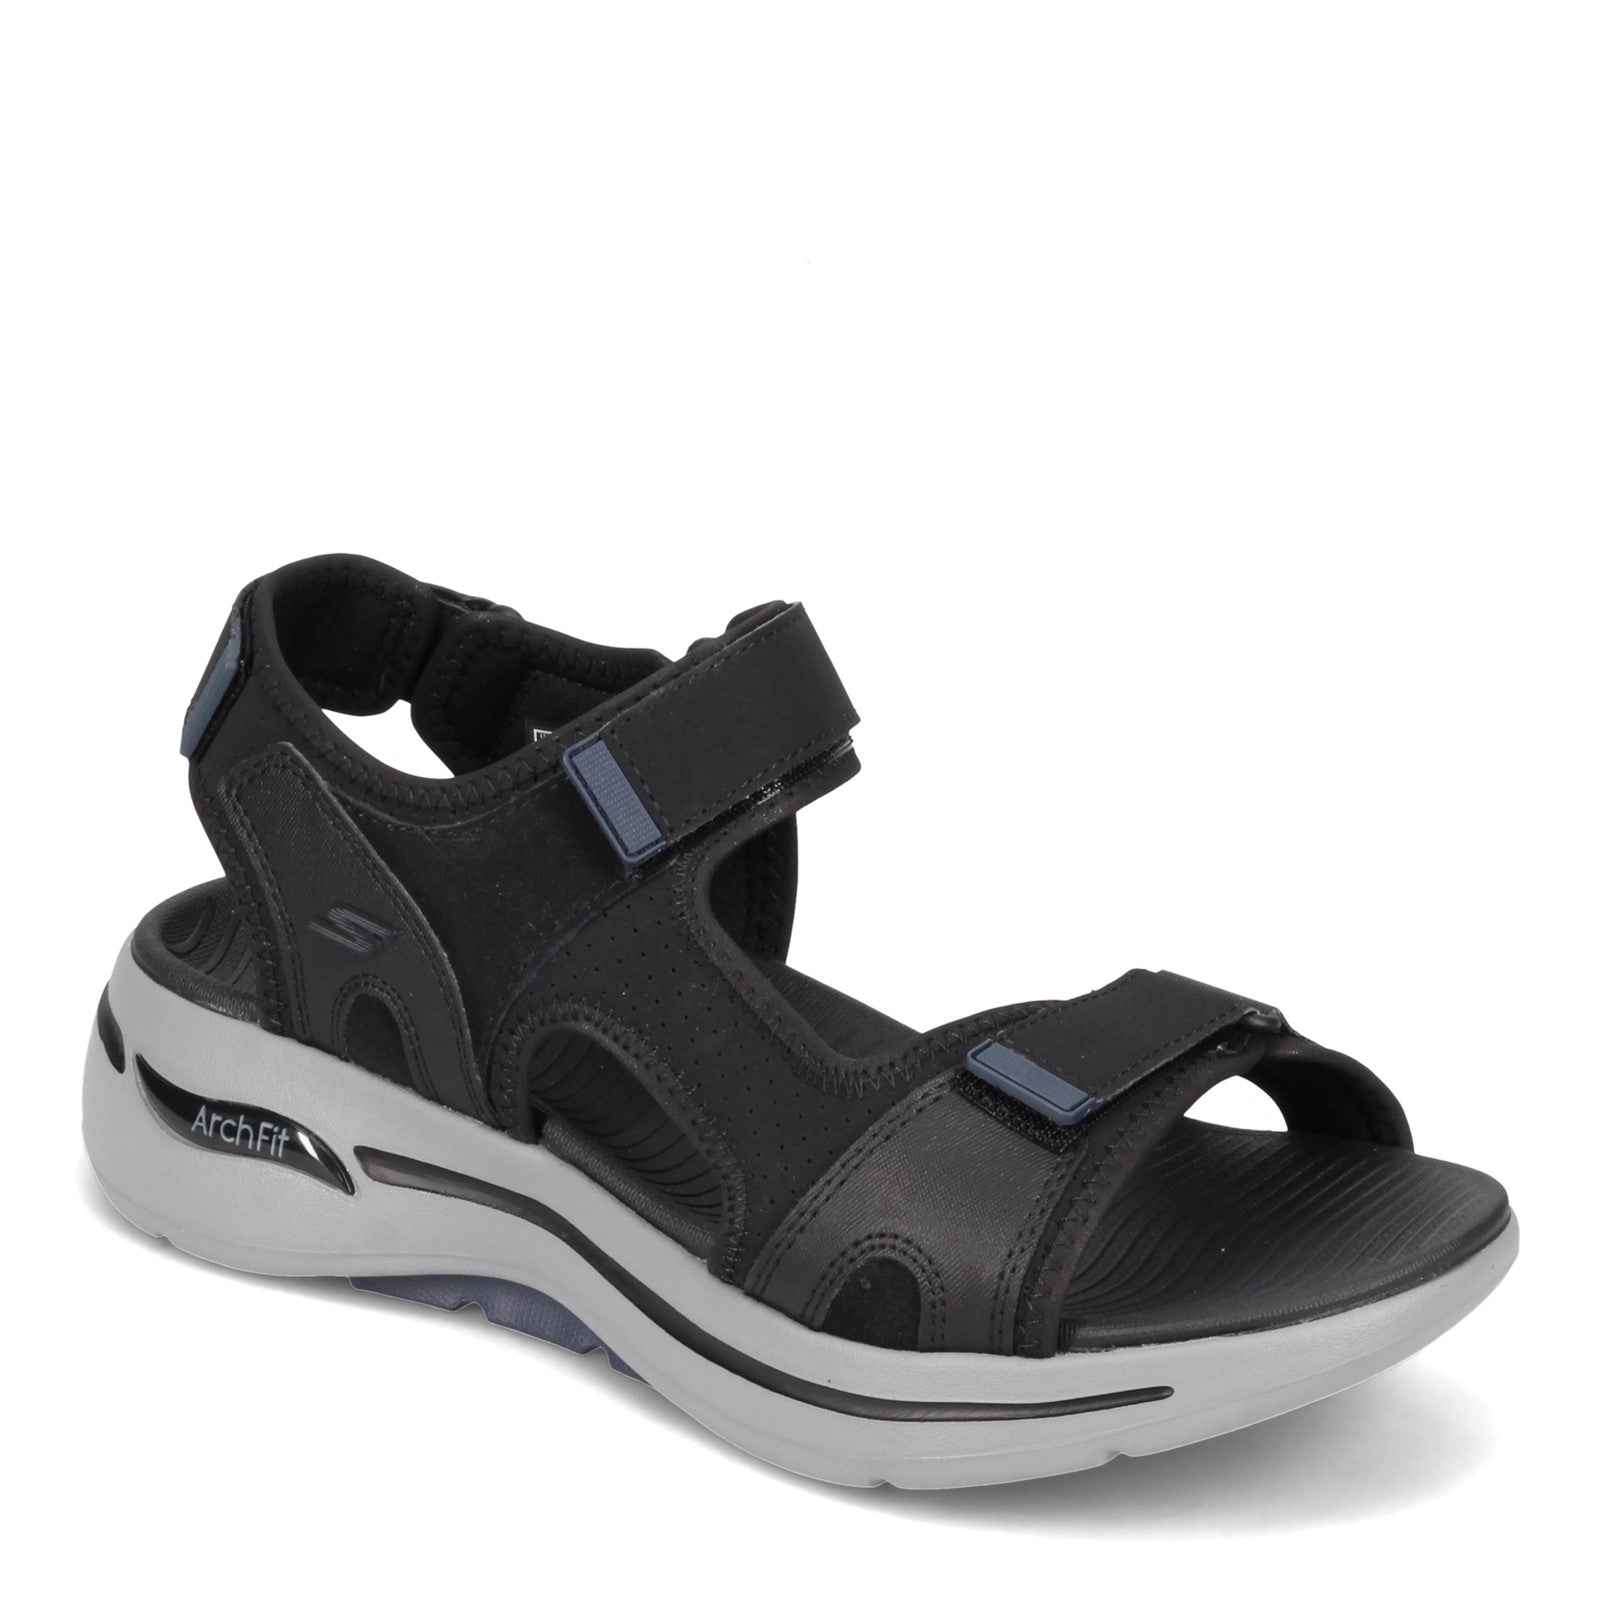 Skechers-Men's Fashion Sandals-243159-CHAR-ARCH FIT UK8 : Amazon.in: Fashion